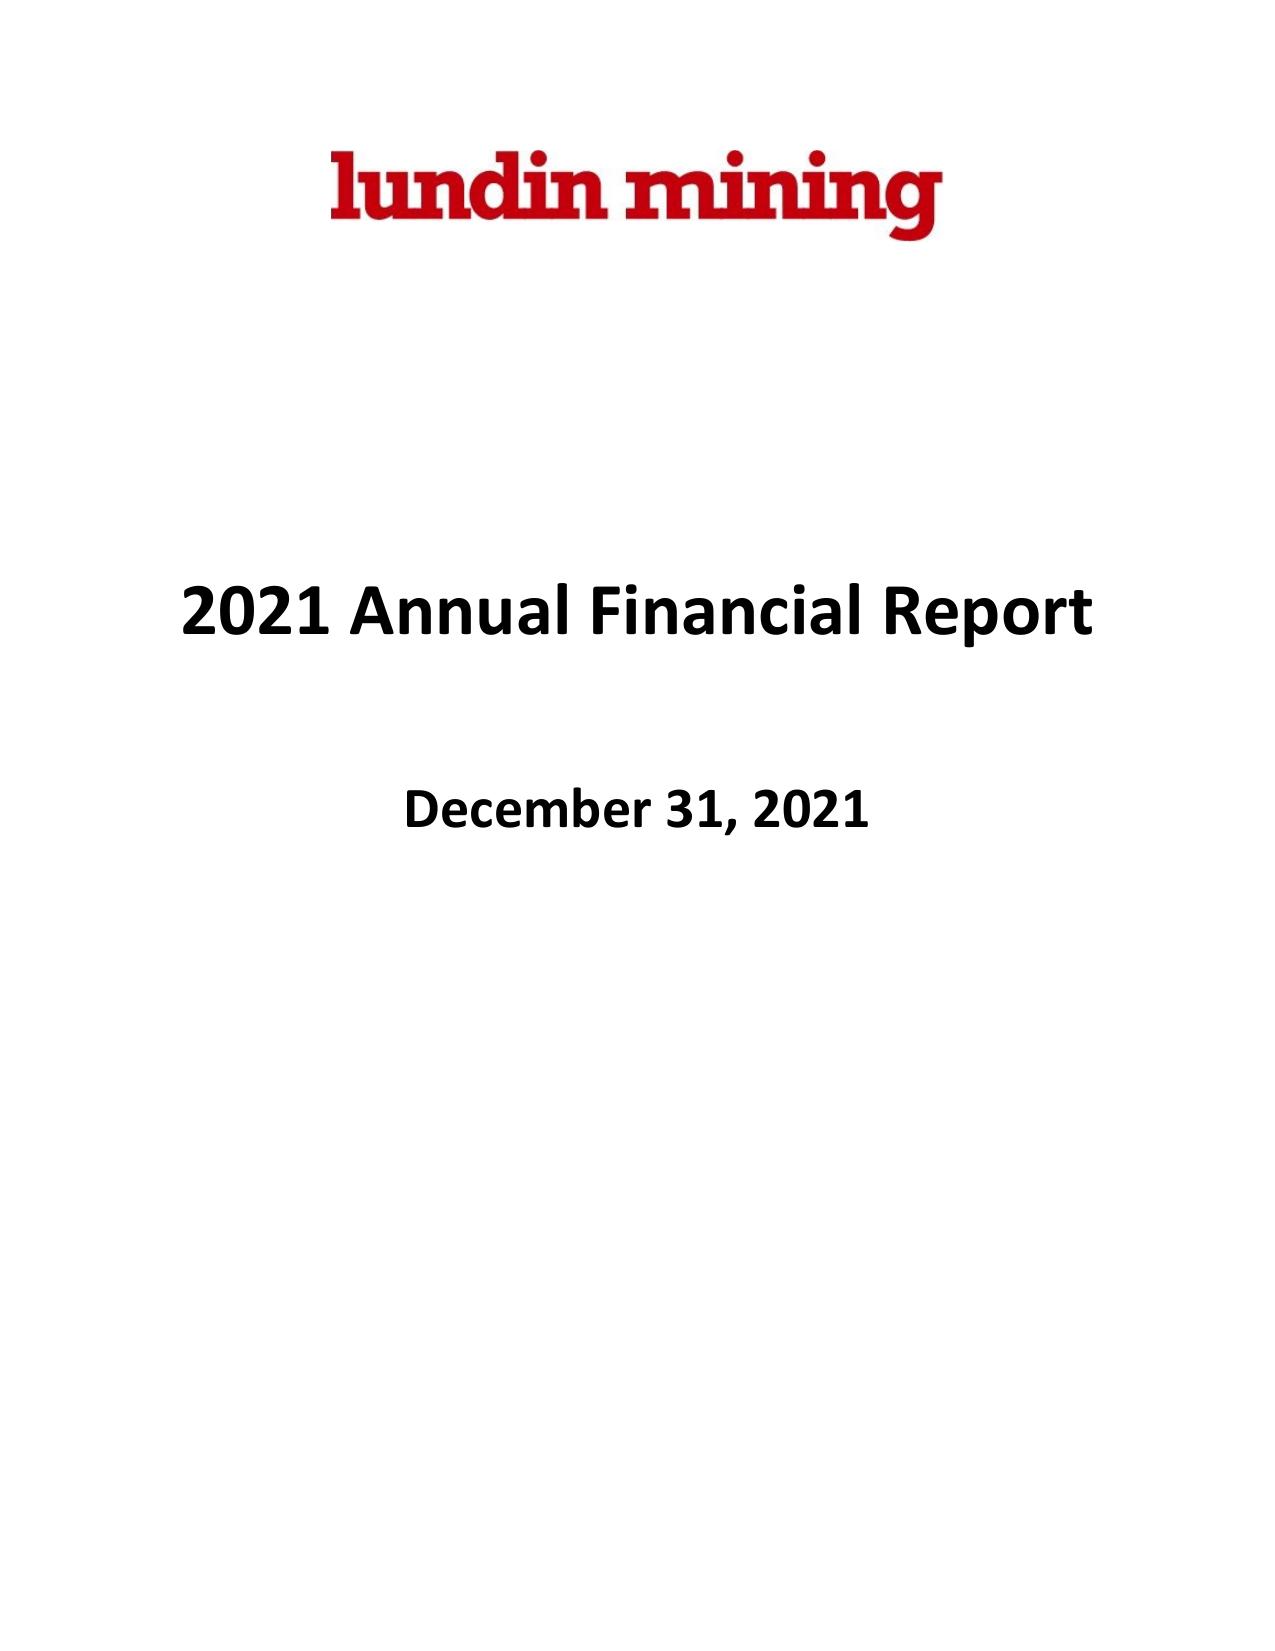 LUNDINMINING 2021 Annual Report